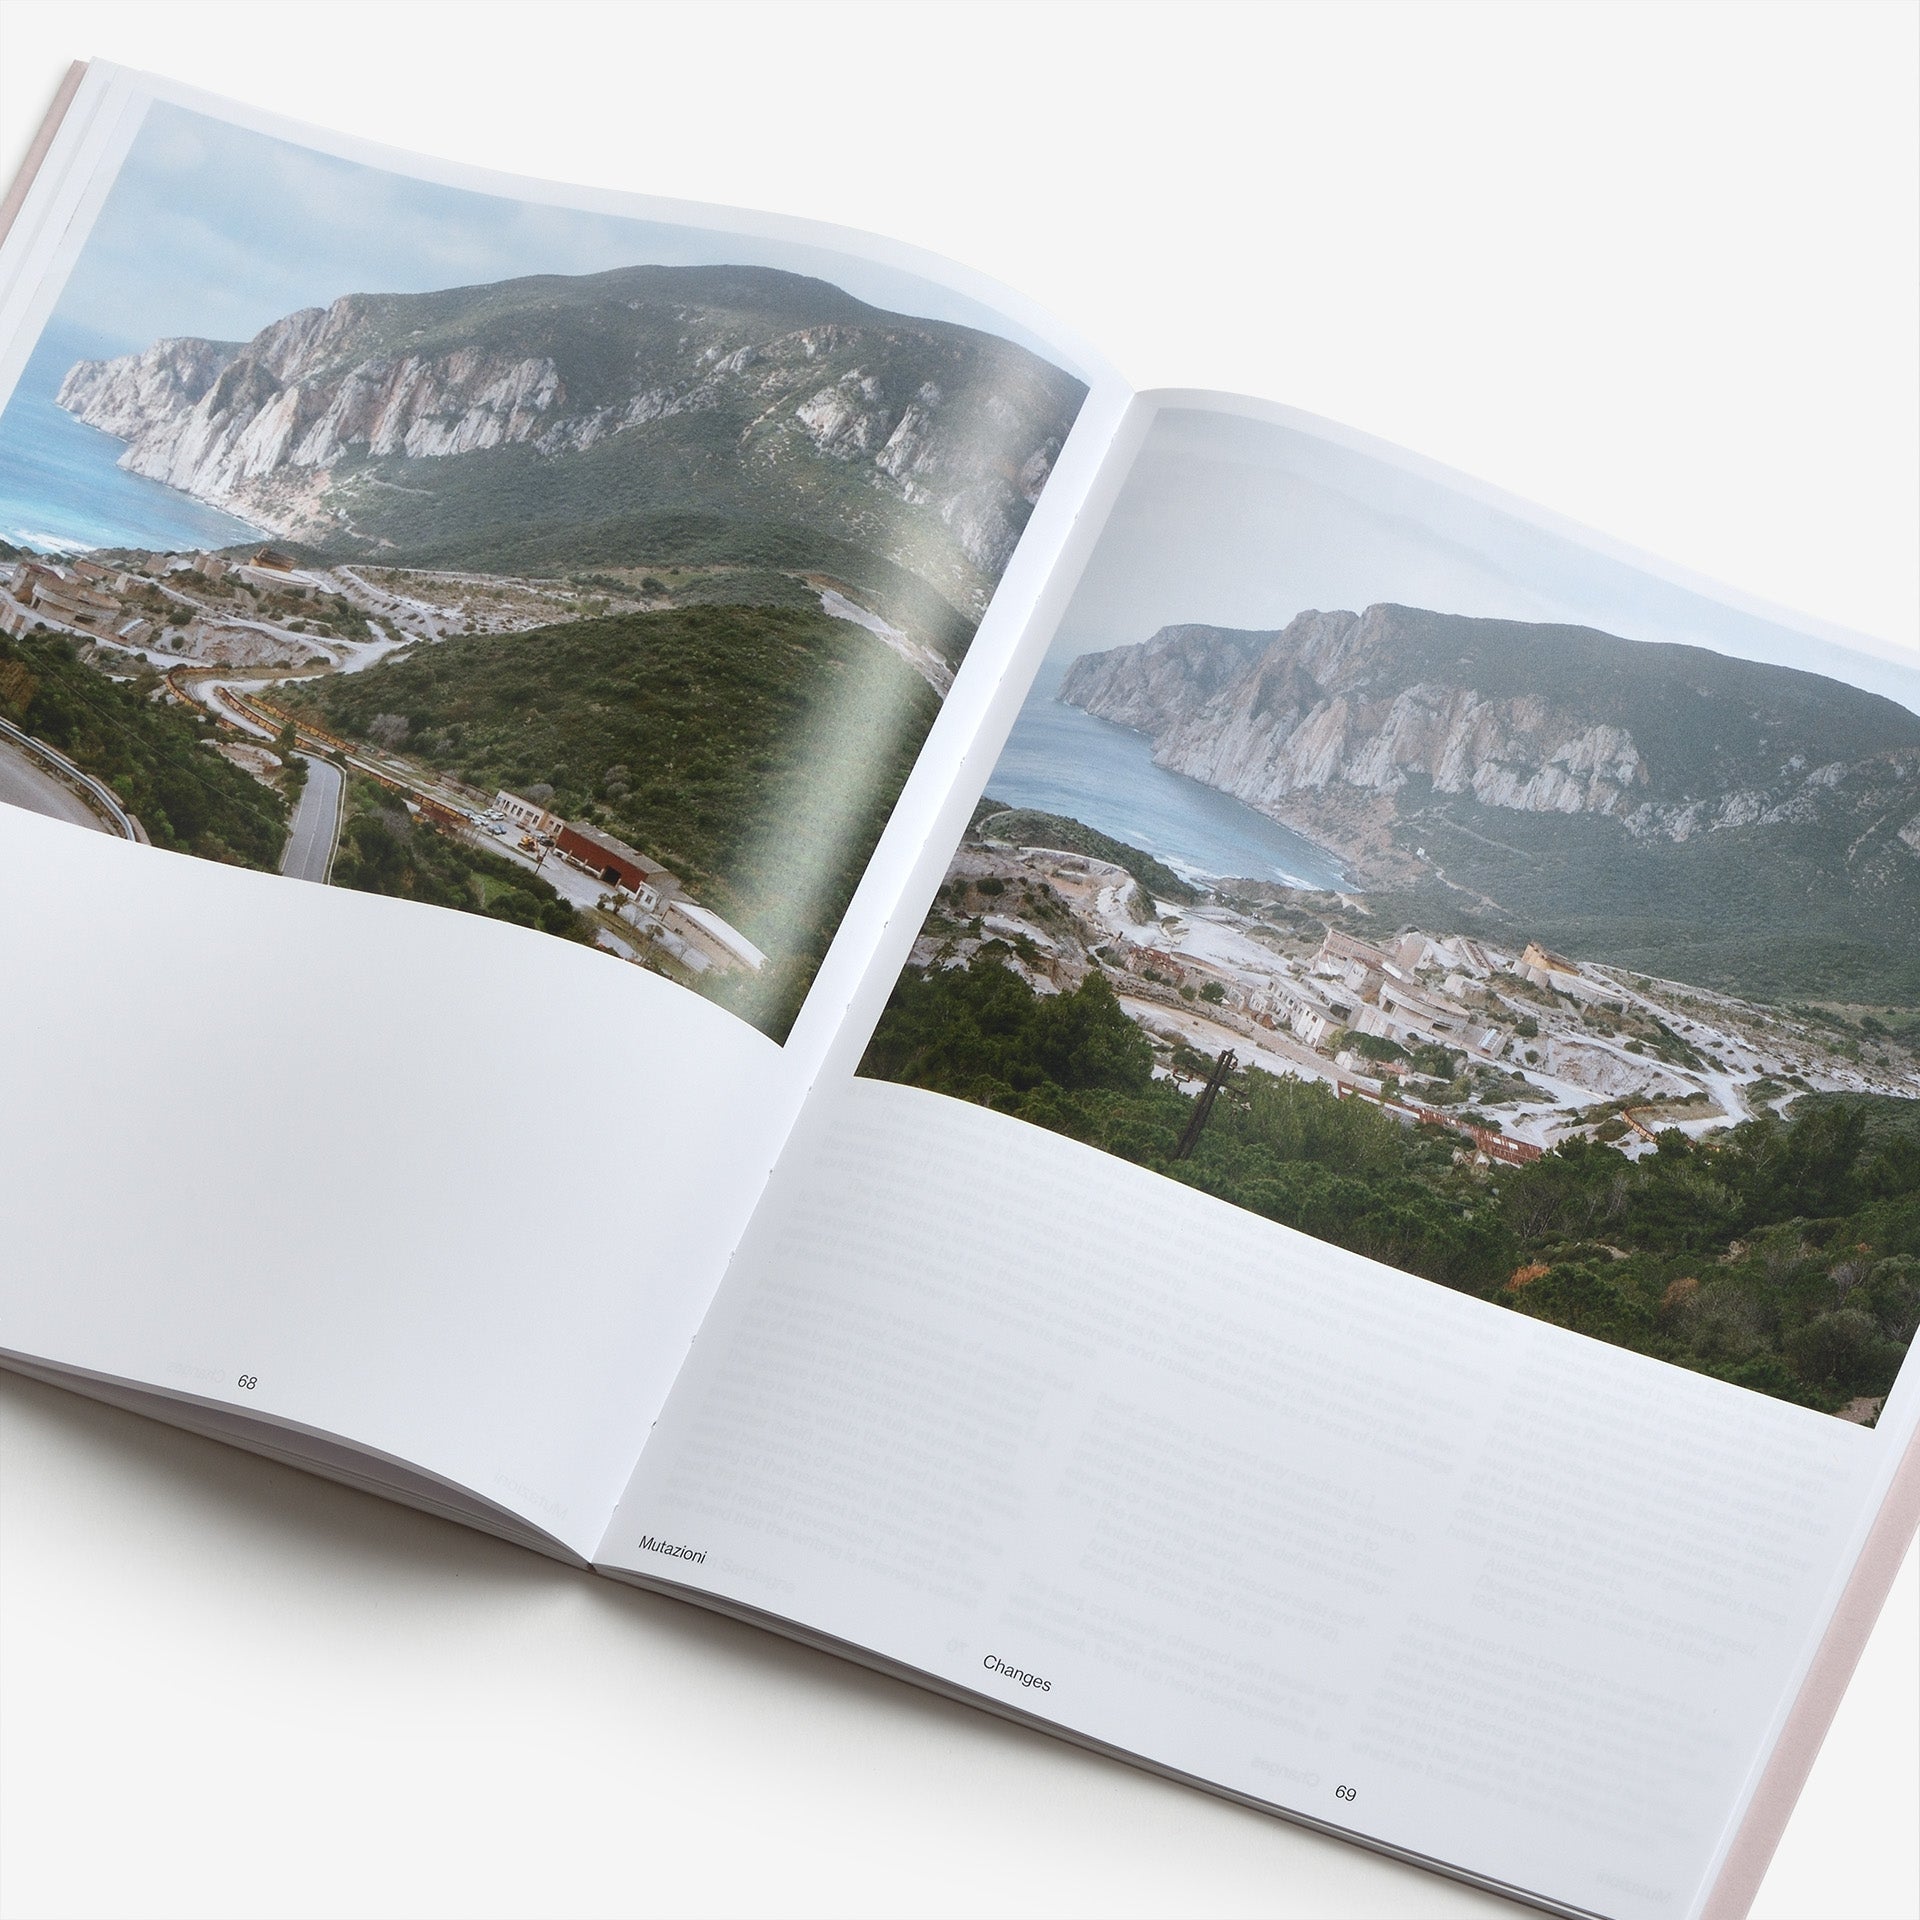 G. Meloni, G. Peghin: Travels in Sardinia - Through the Mines of Iglesias